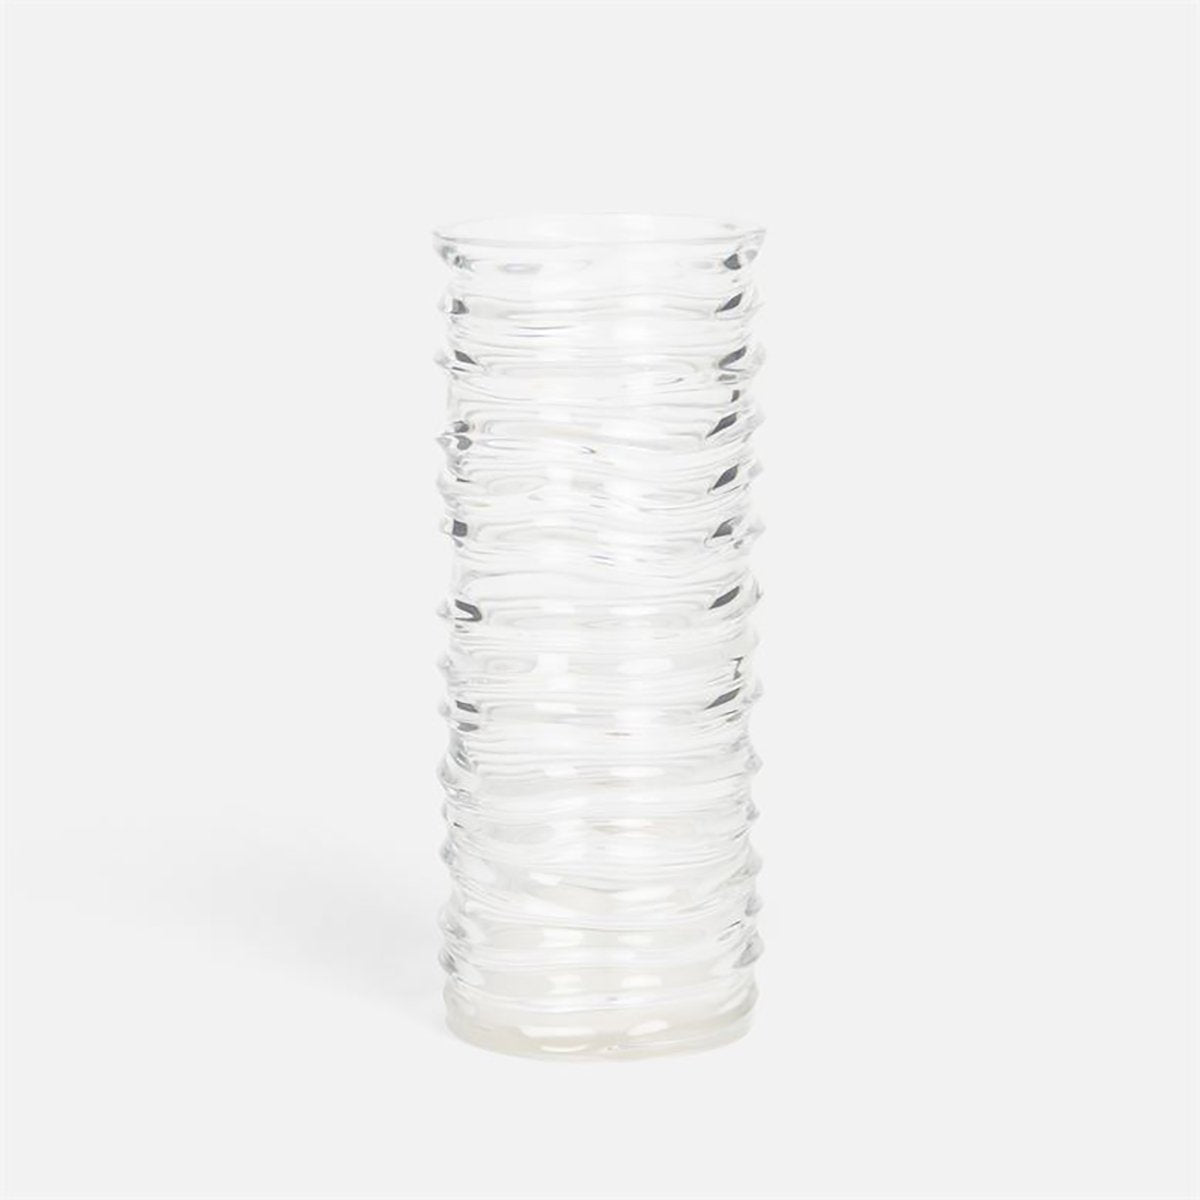 Made Goods Holland Translucent Resin Vase